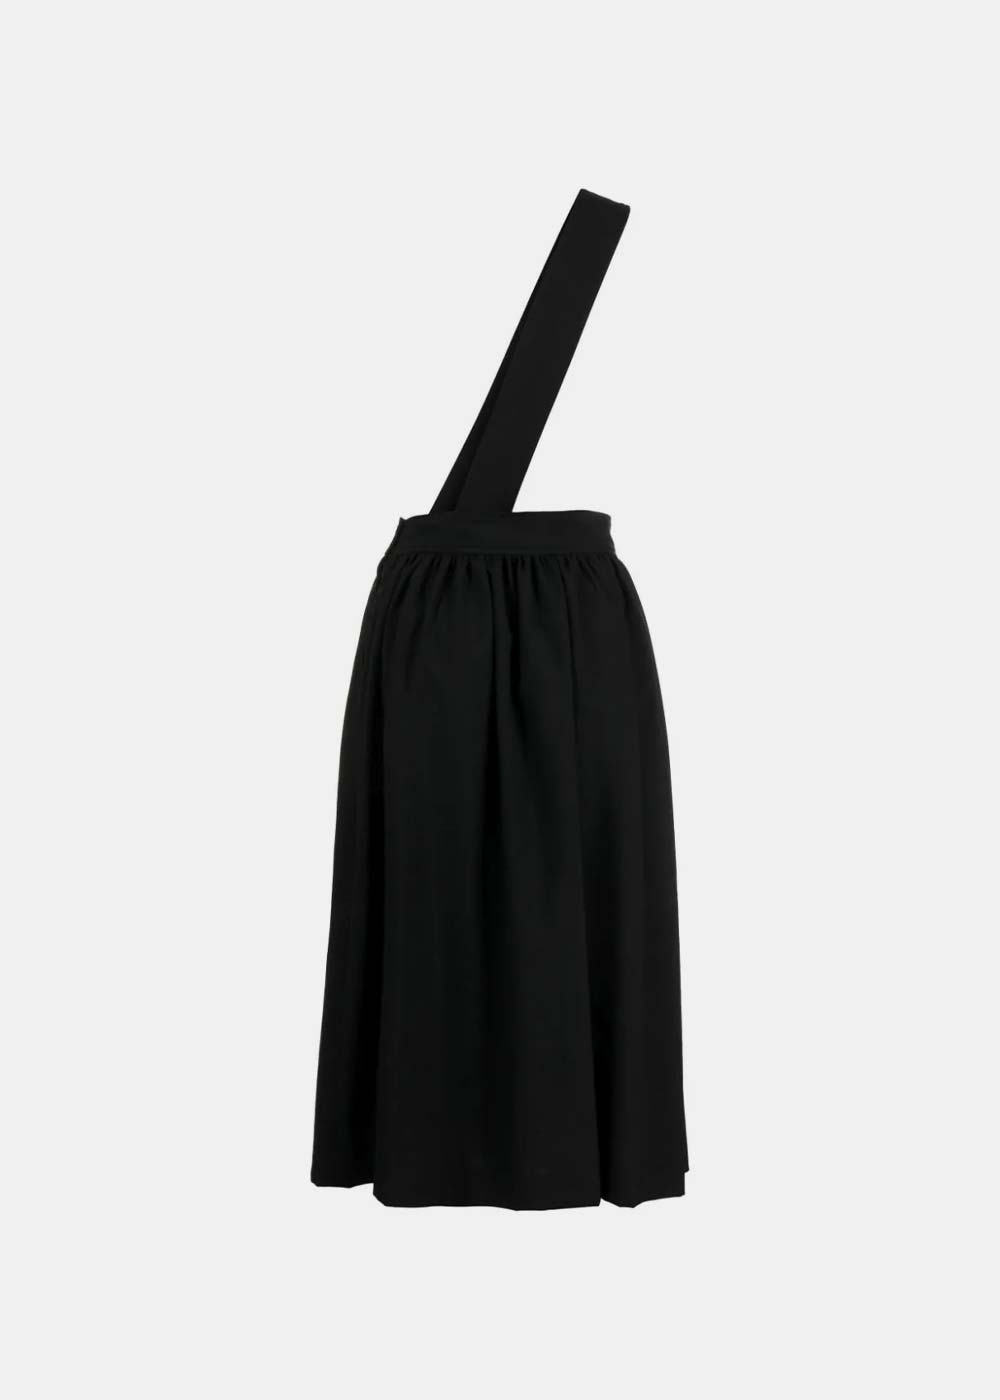 Comme des Garçons Suspender Skirt, Satin Effect Black